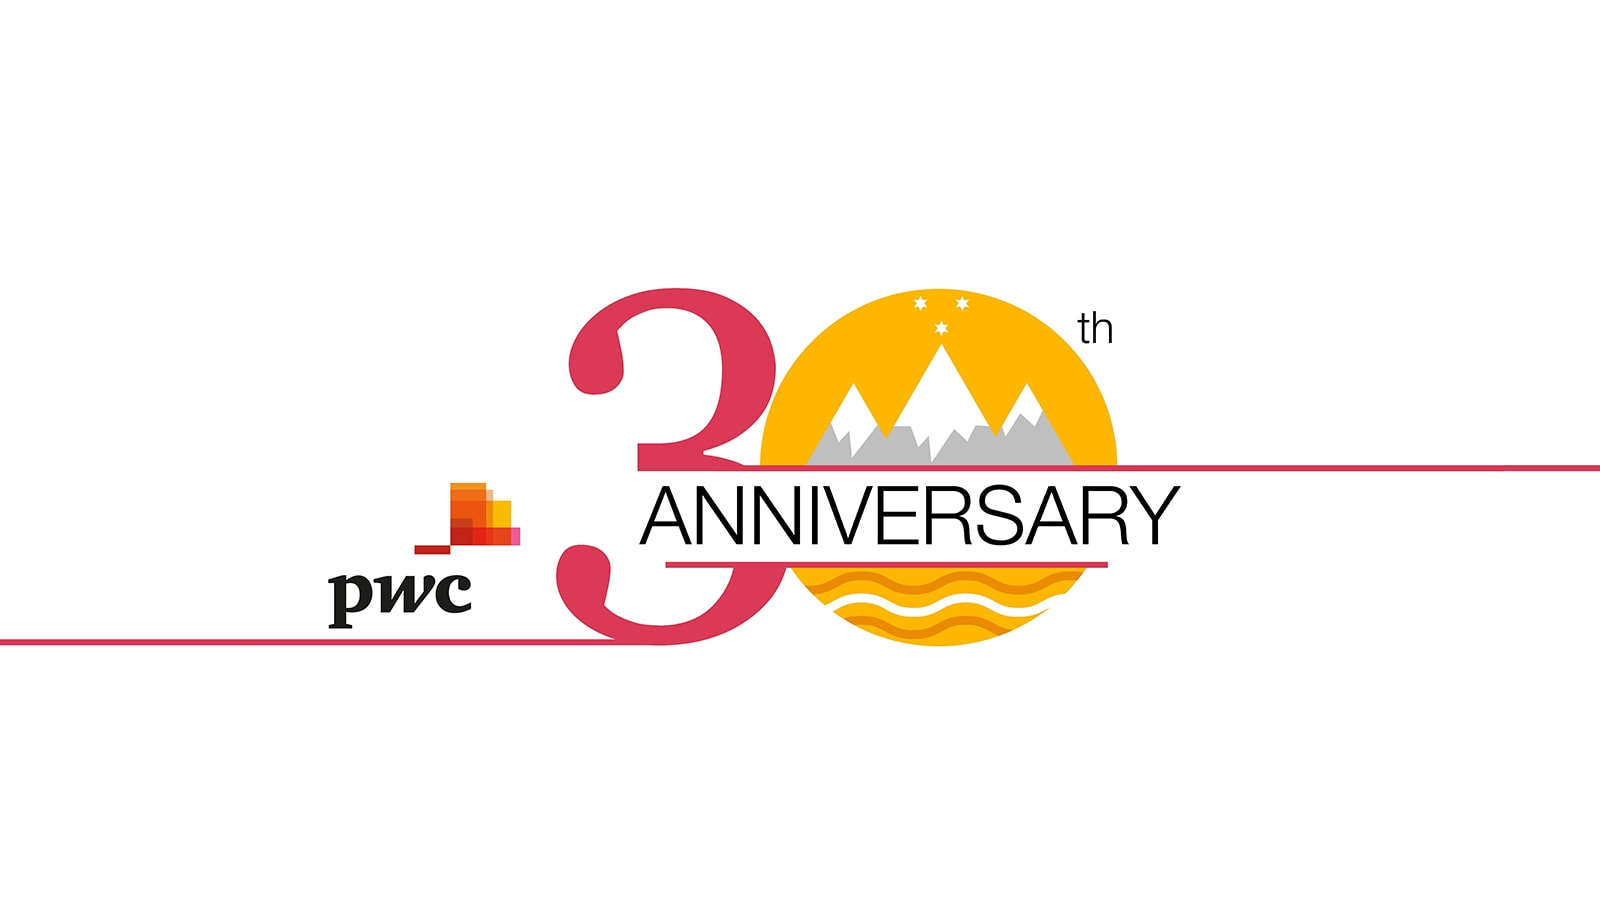 PwC Slovenia: Celebrating 30 Years!